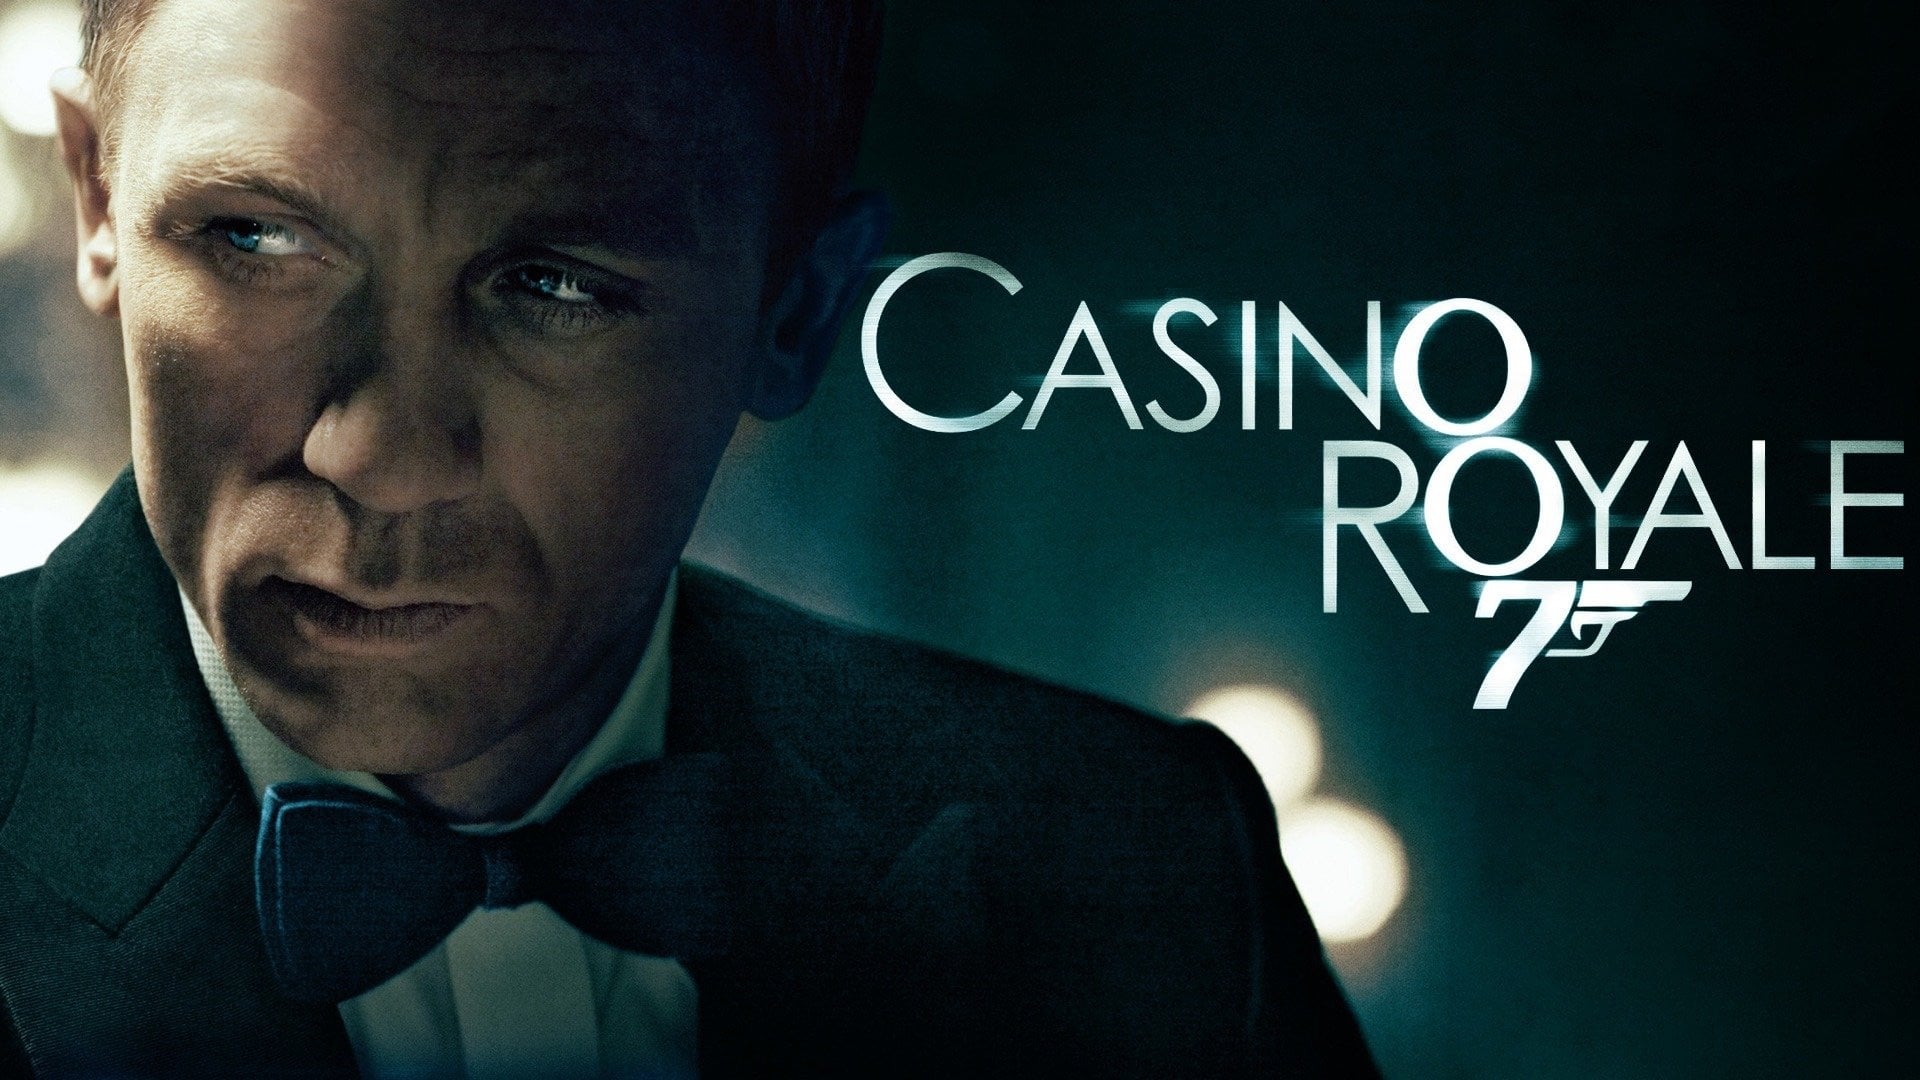 007: Casino Royale